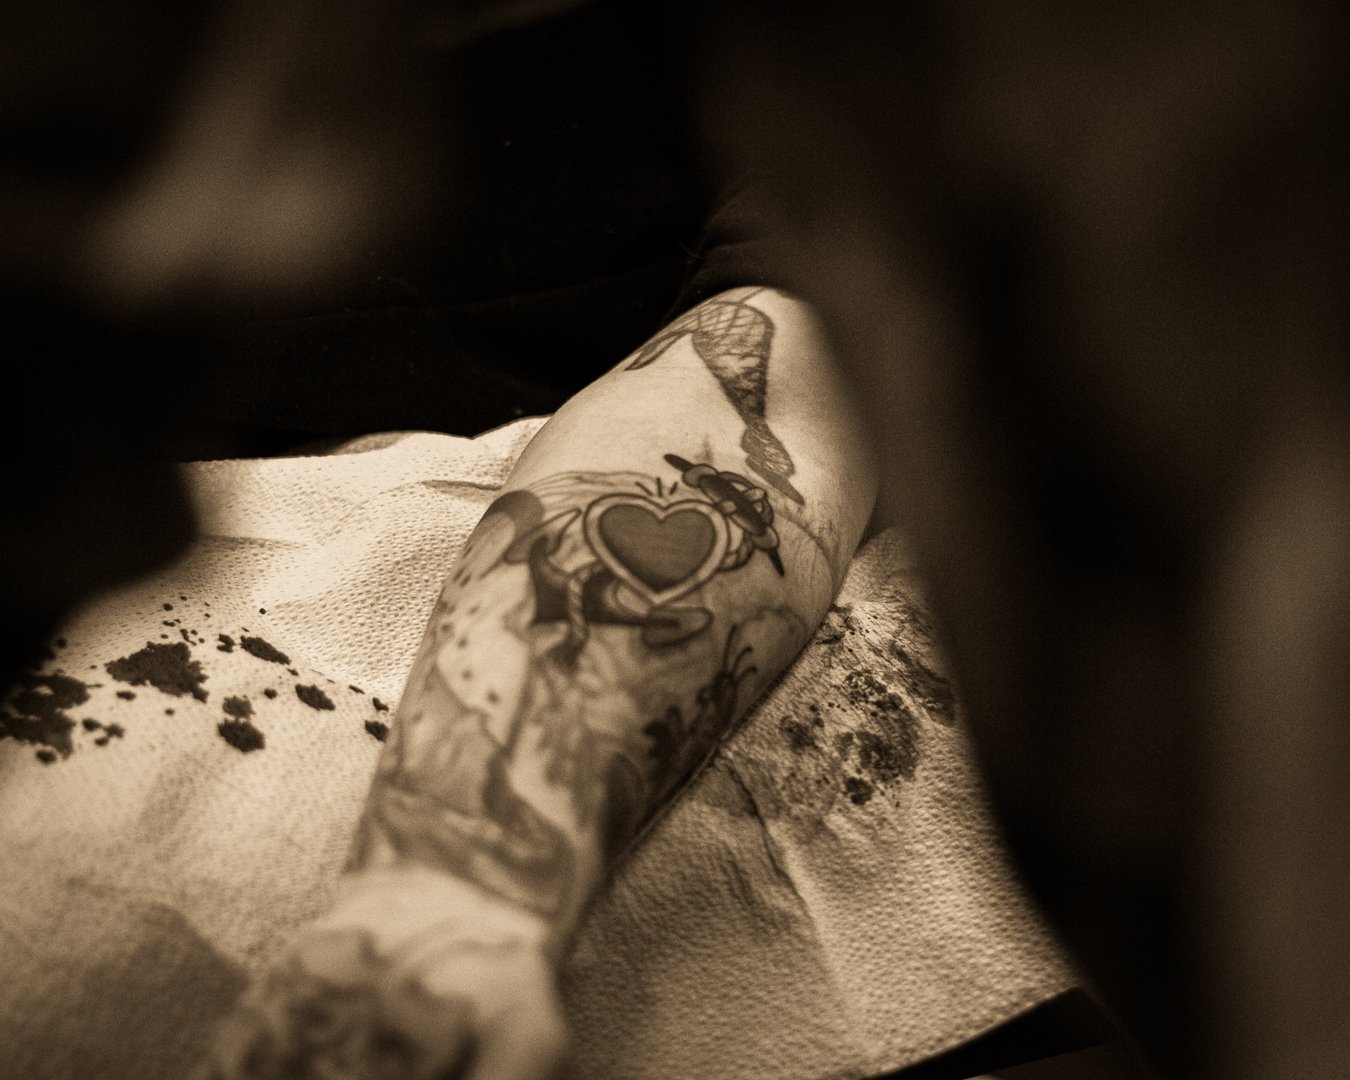 TegadermSanidermTatuderm healing process  Page 22  Tattoo After Care   Last Sparrow Tattoo